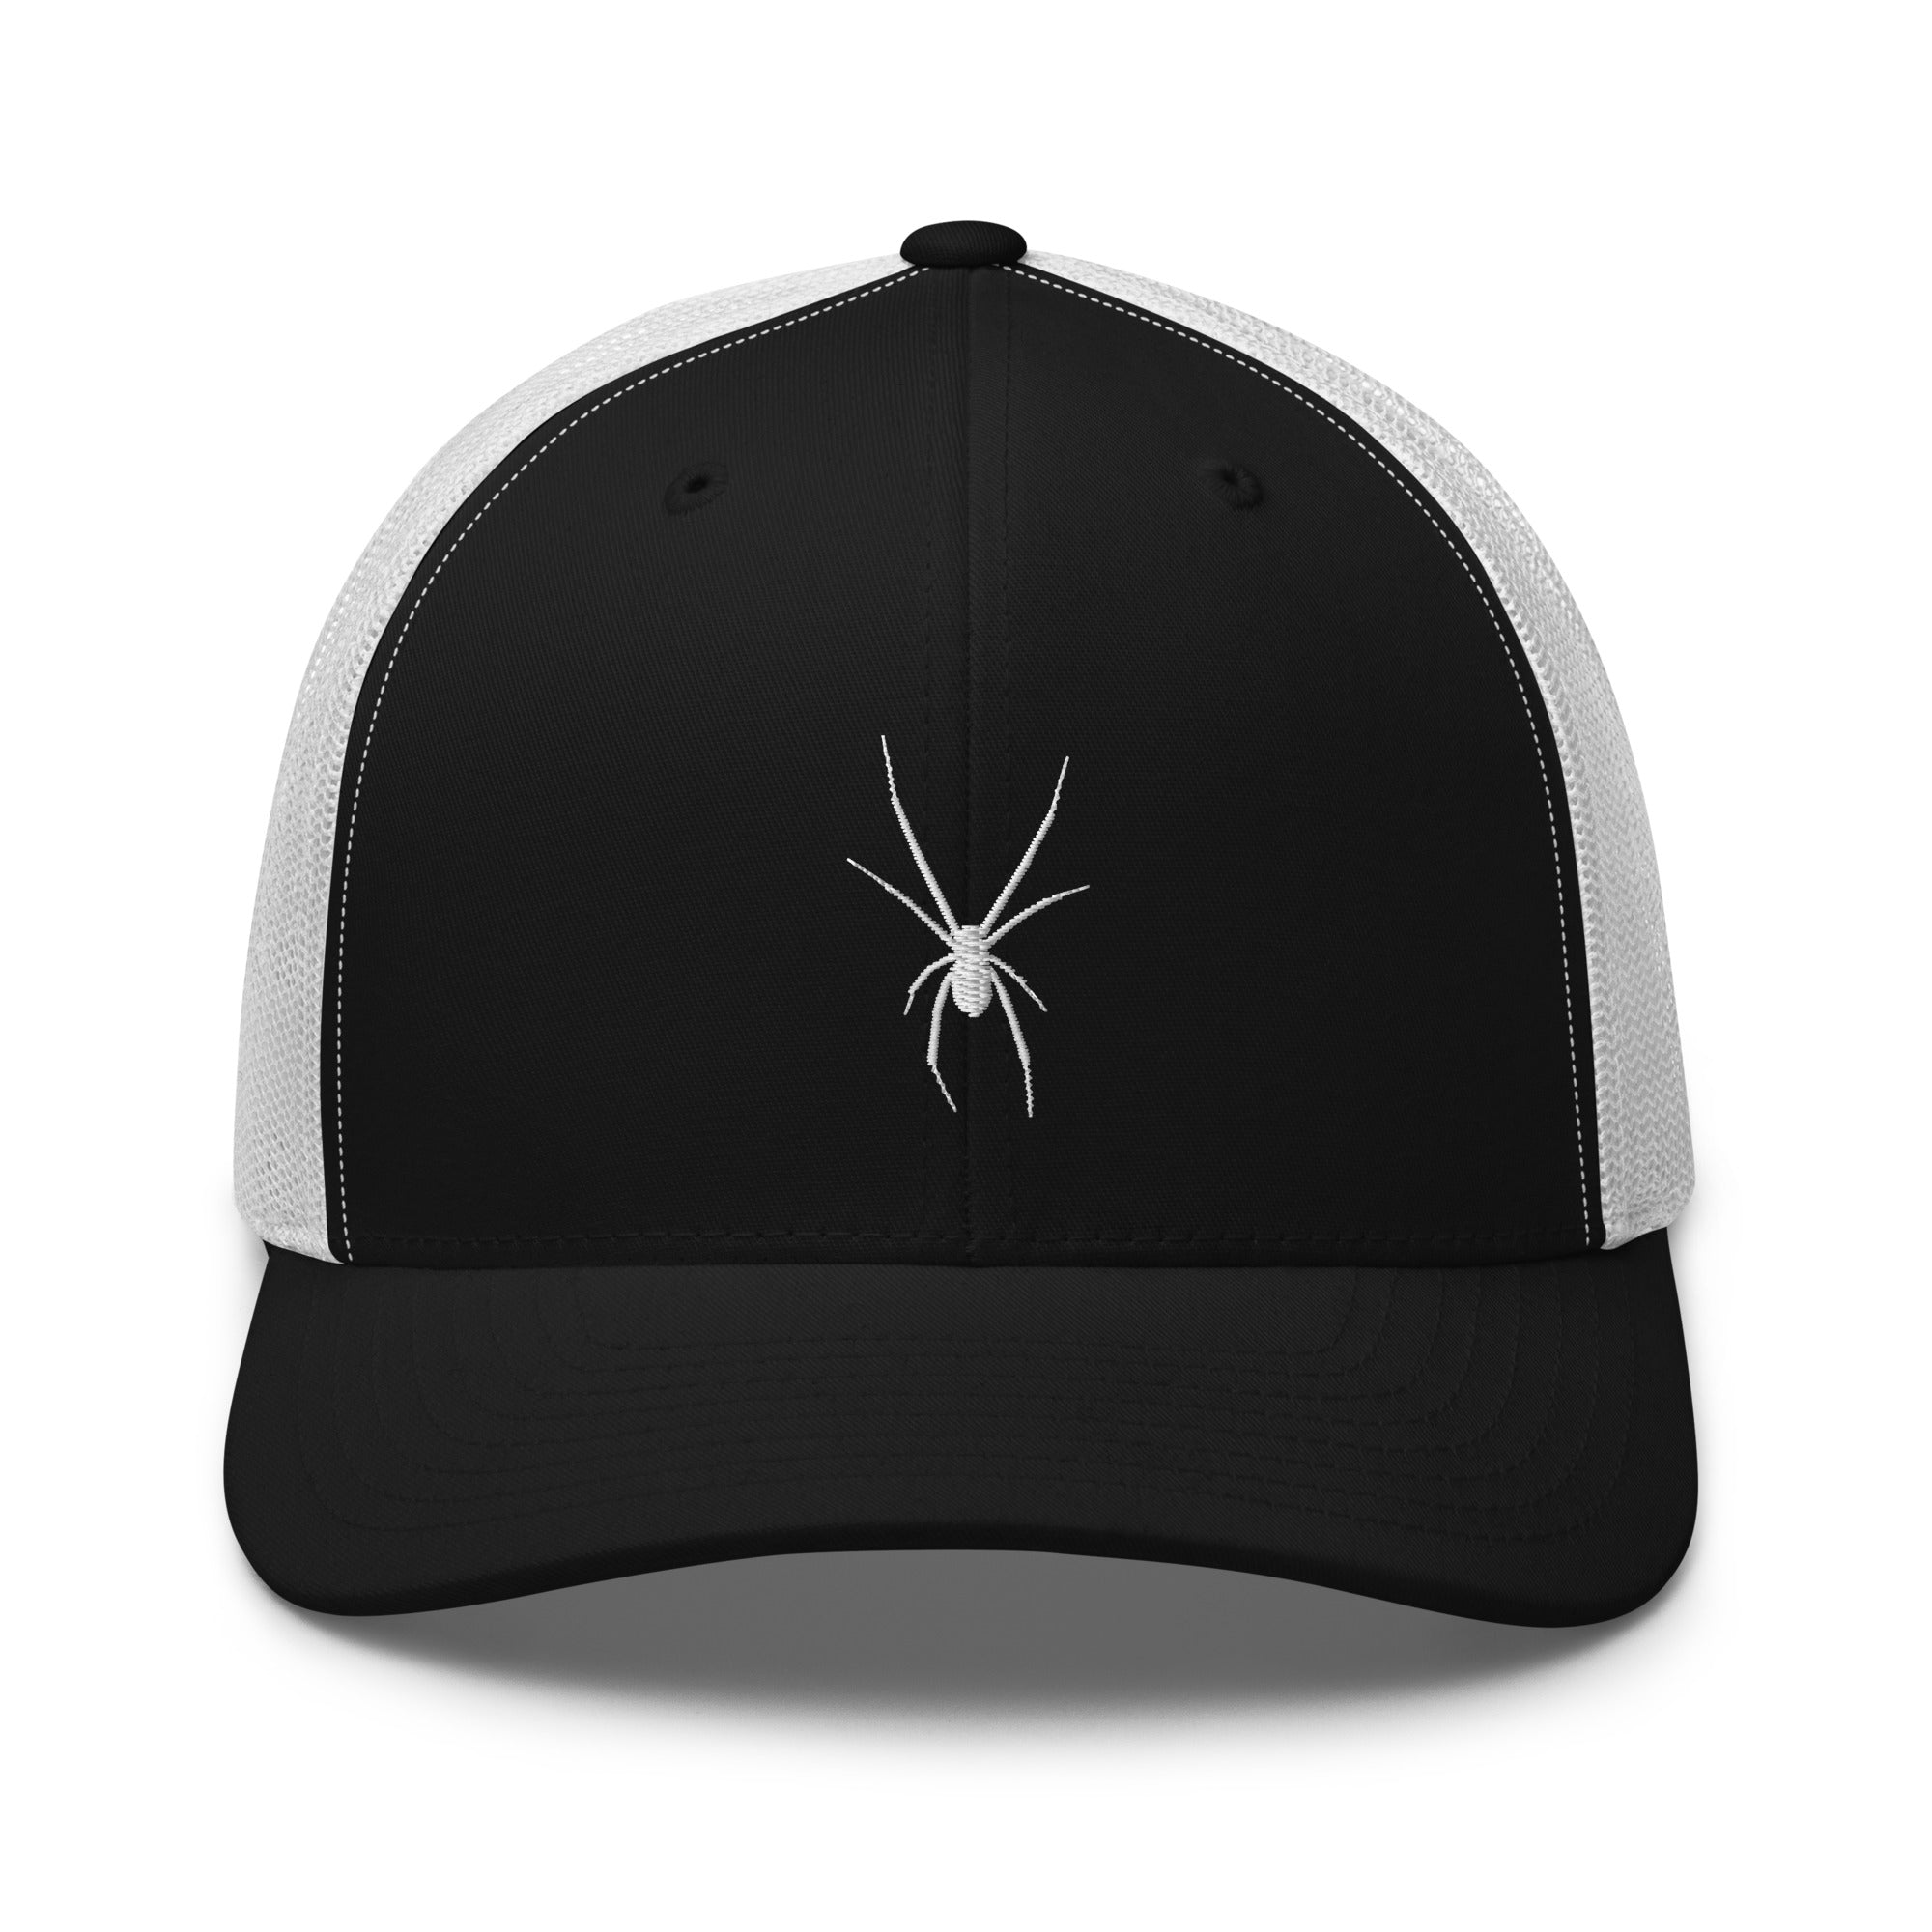 White Arachnid Creepy Black Widow Spider Embroidered Trucker Cap Snapback Hat